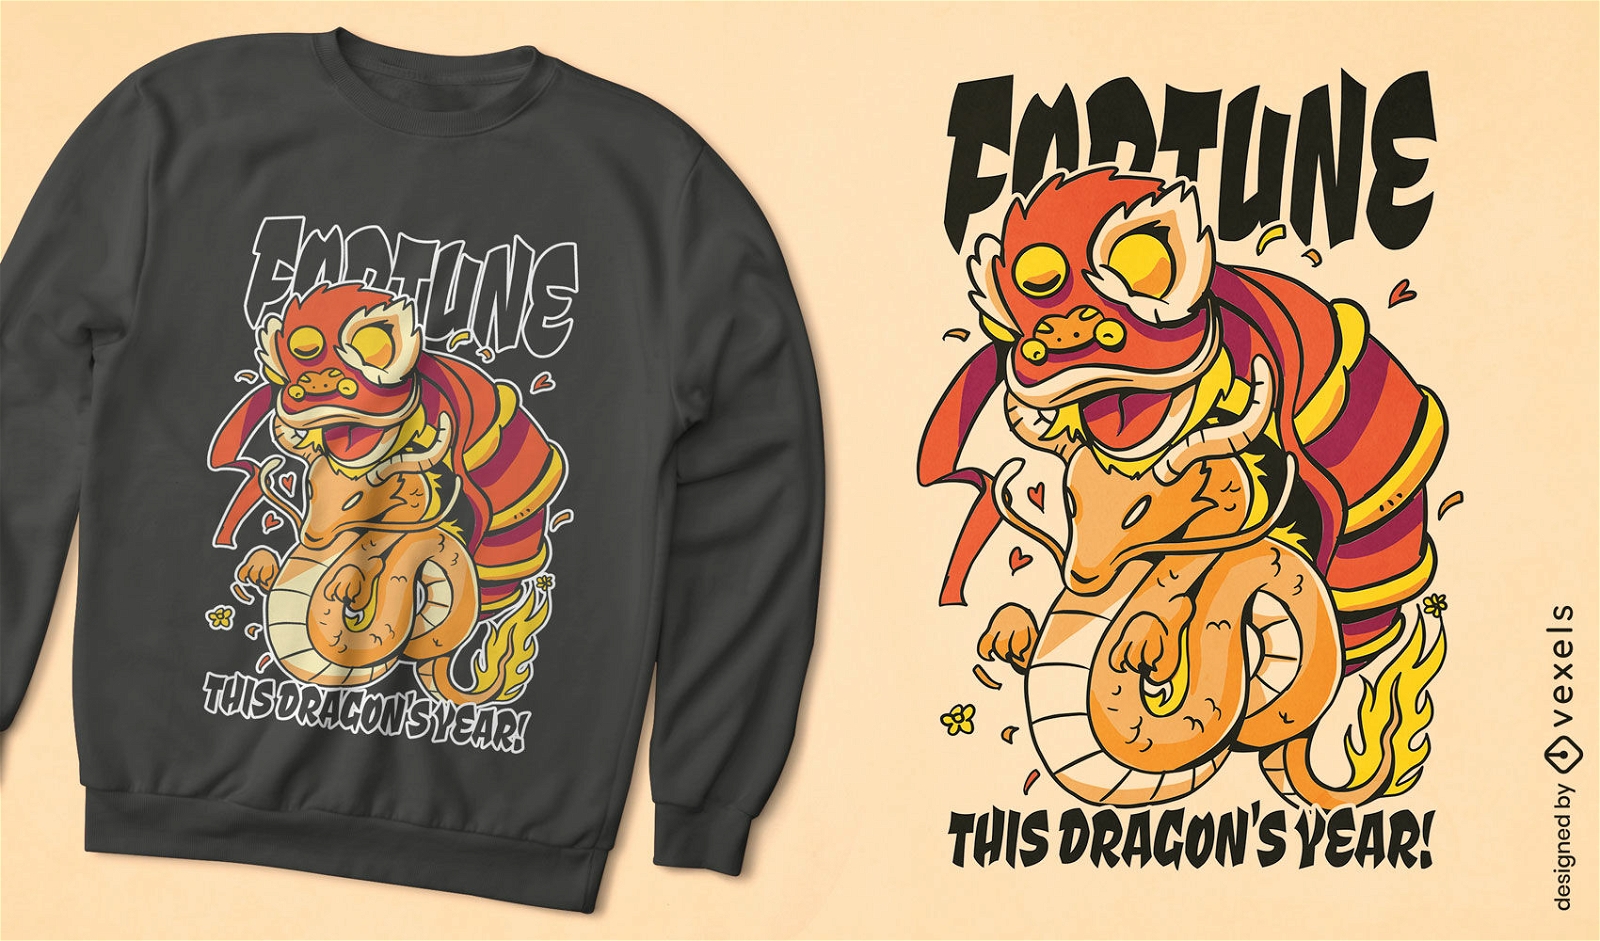 Chinese dragon's year t-shirt design